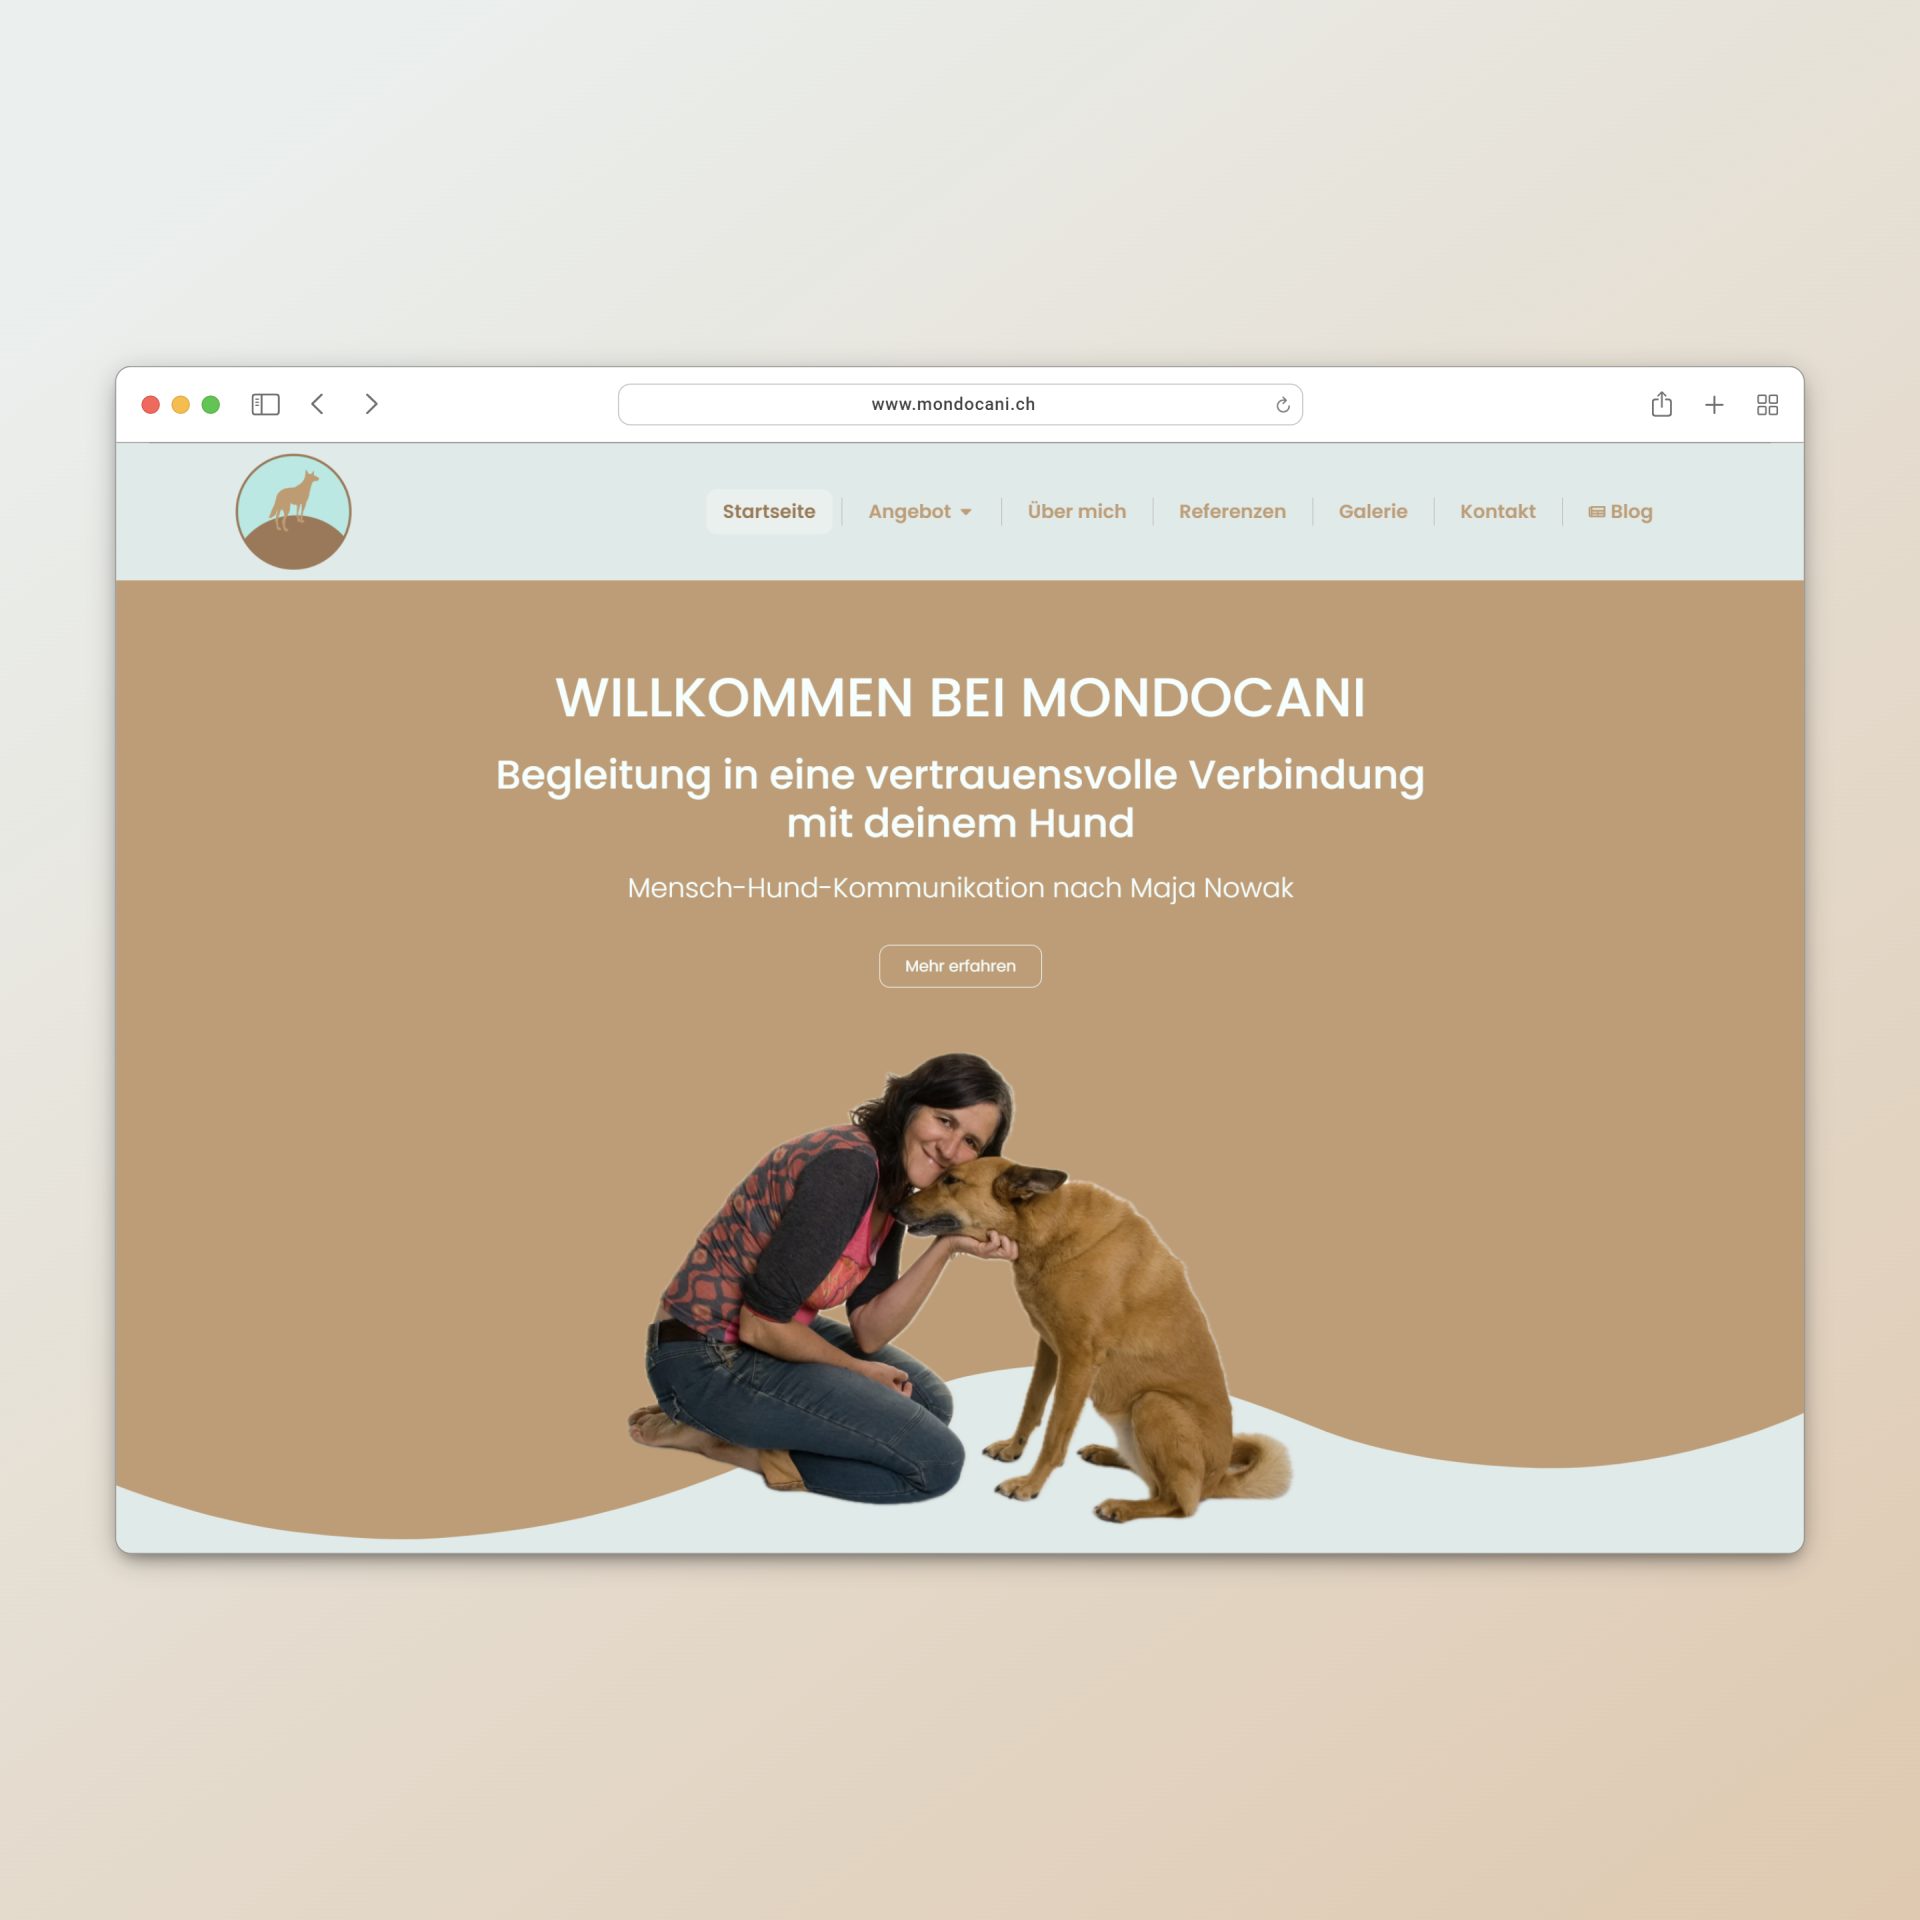 Mondocani – Mobile Hundeschule